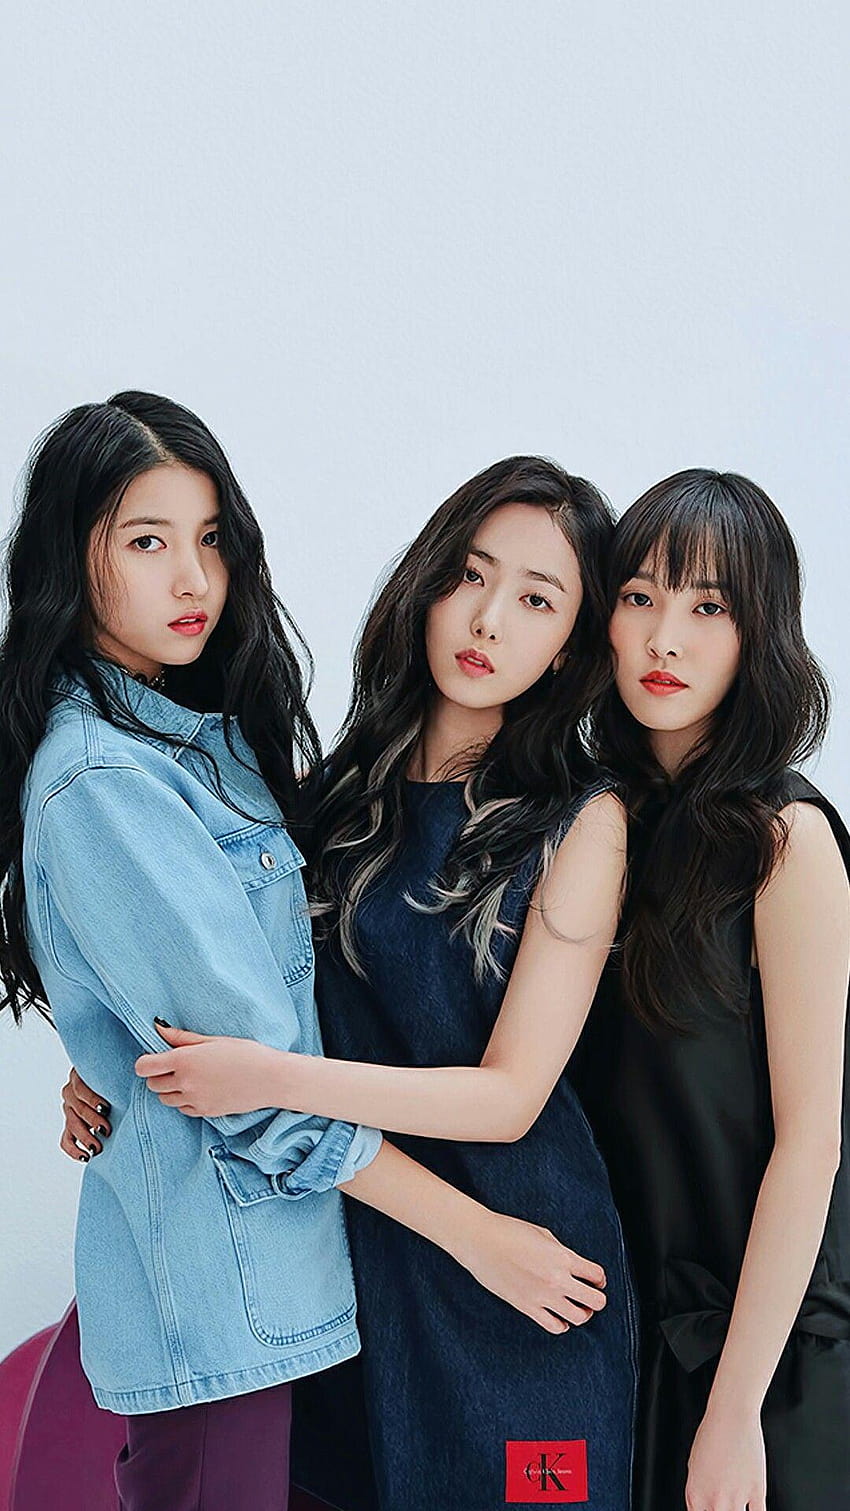 Gorgeous Members of 'GFriend' (K-pop Group) 8K wallpaper download